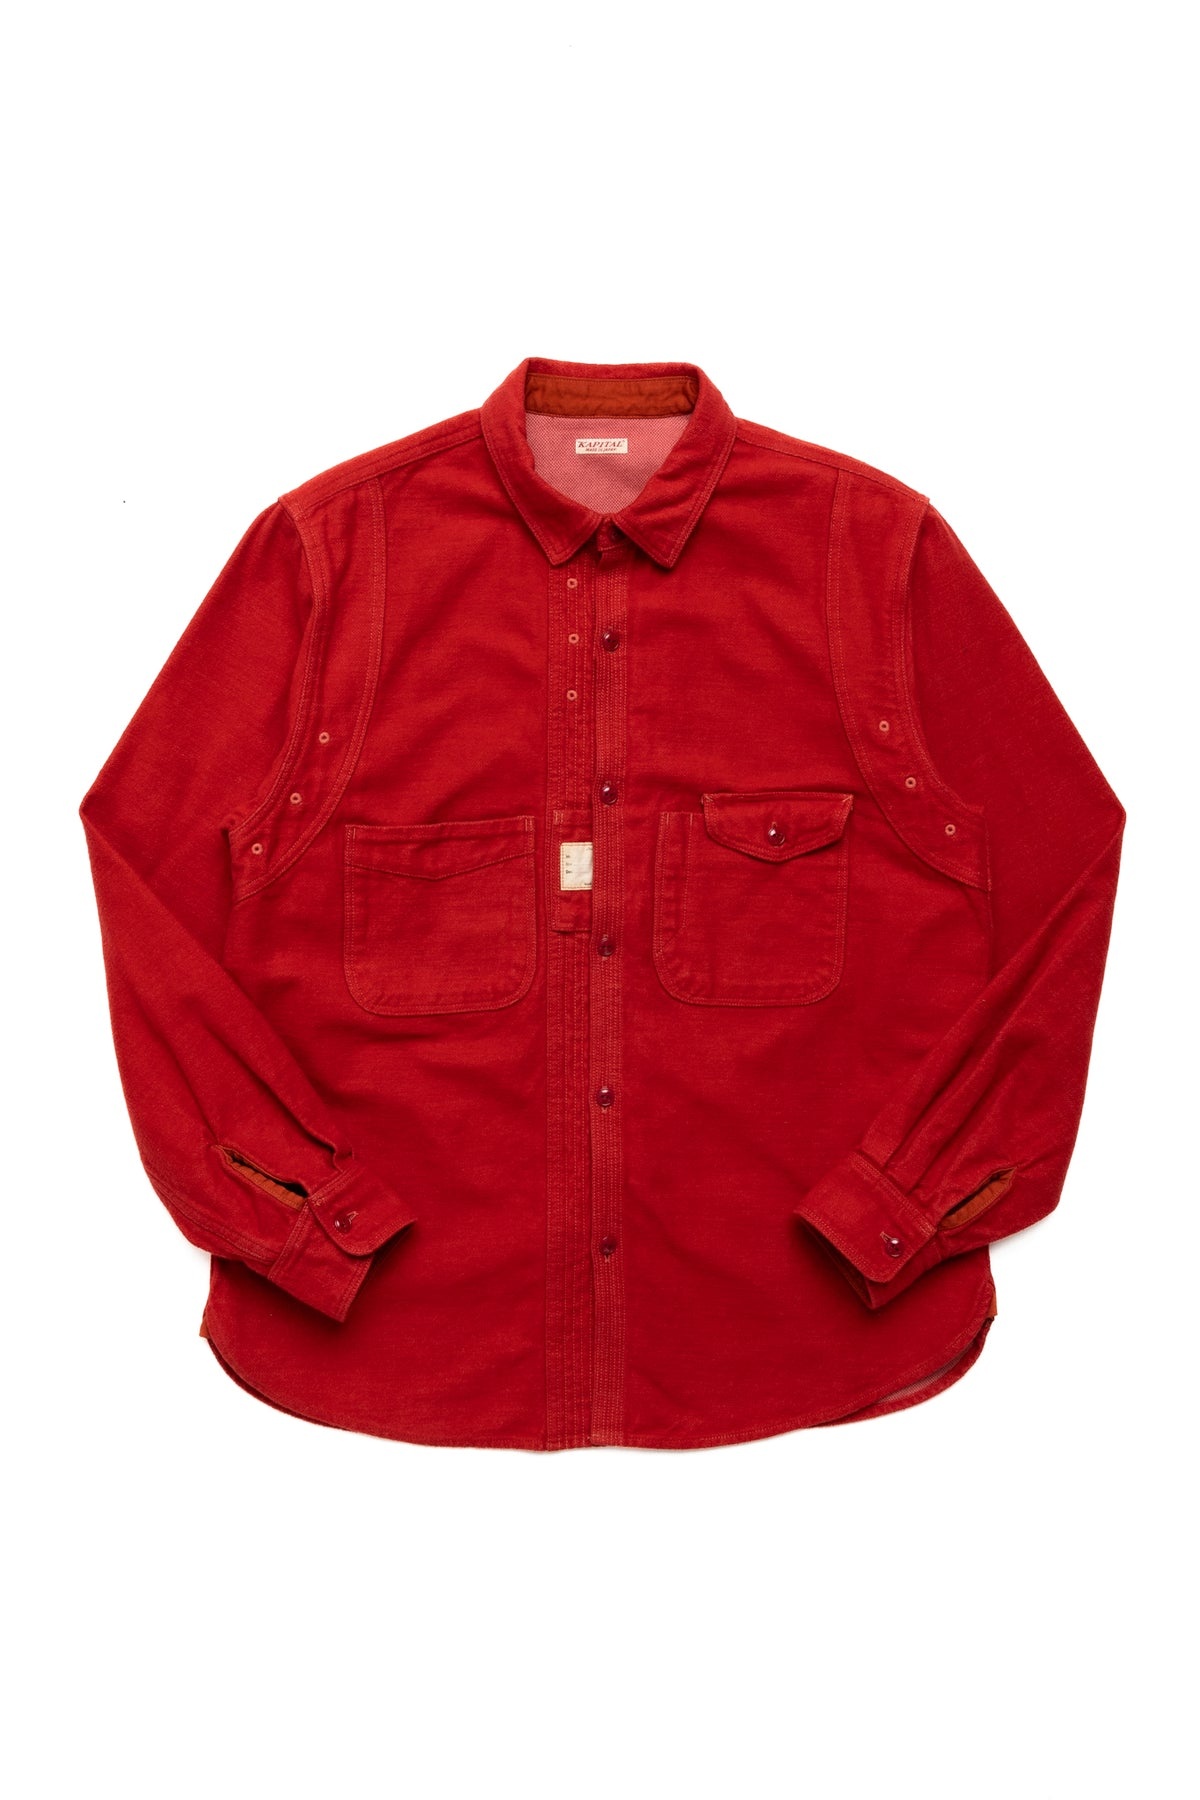 CPO Cotton Wool MOPAR Shirt - Red - 1